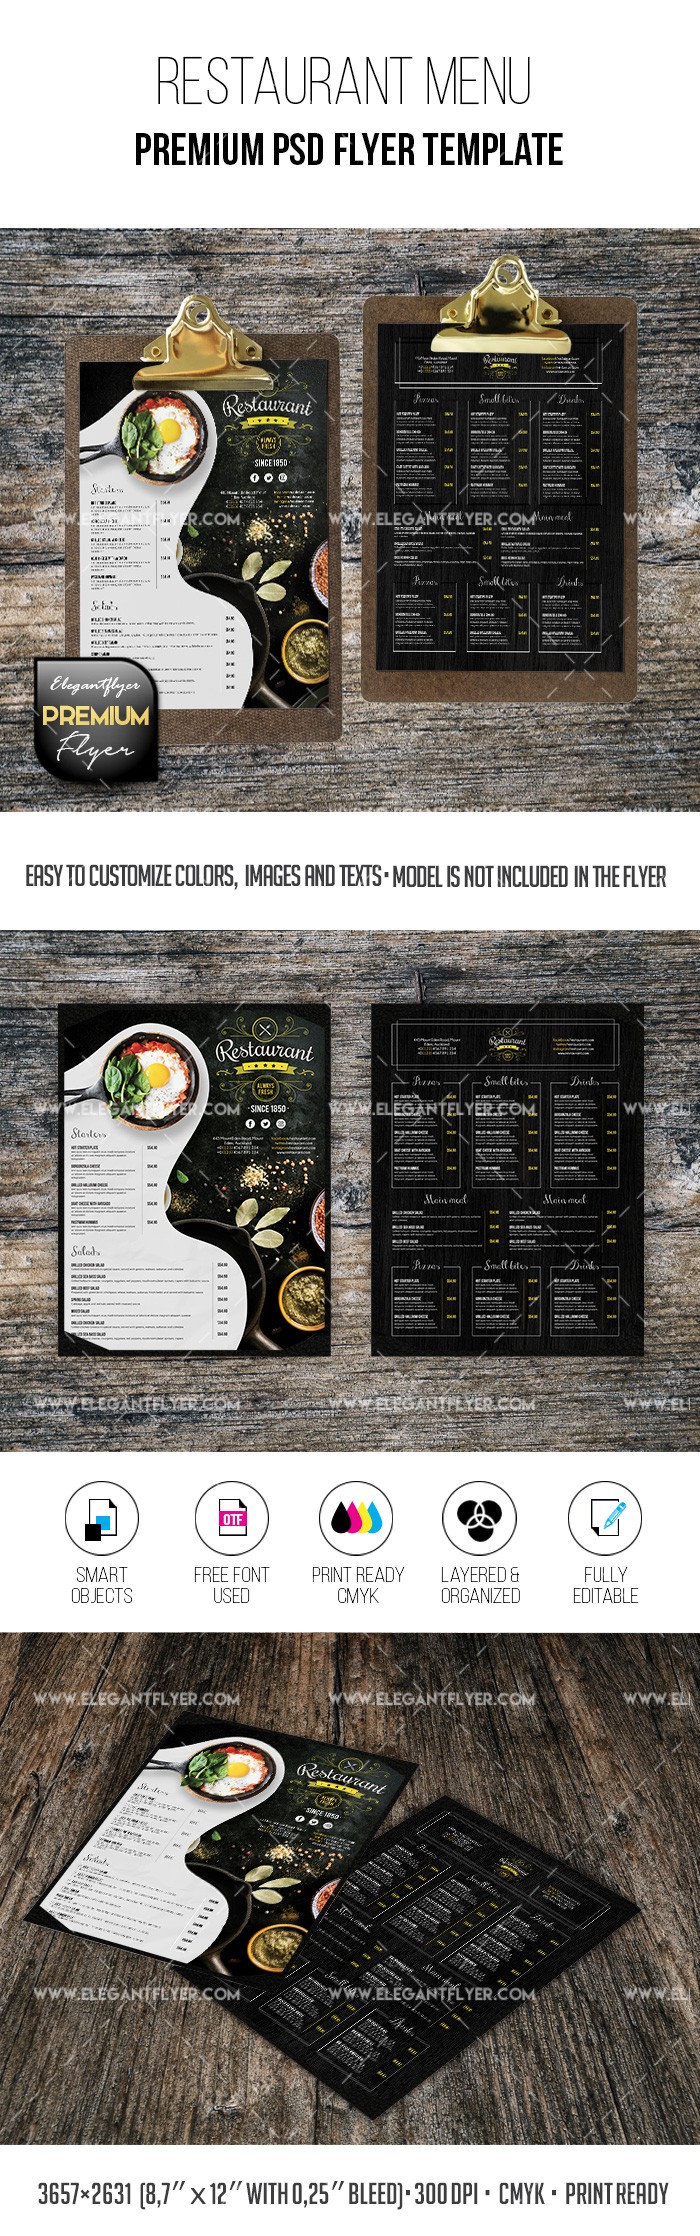 Brochure du menu du restaurant by ElegantFlyer